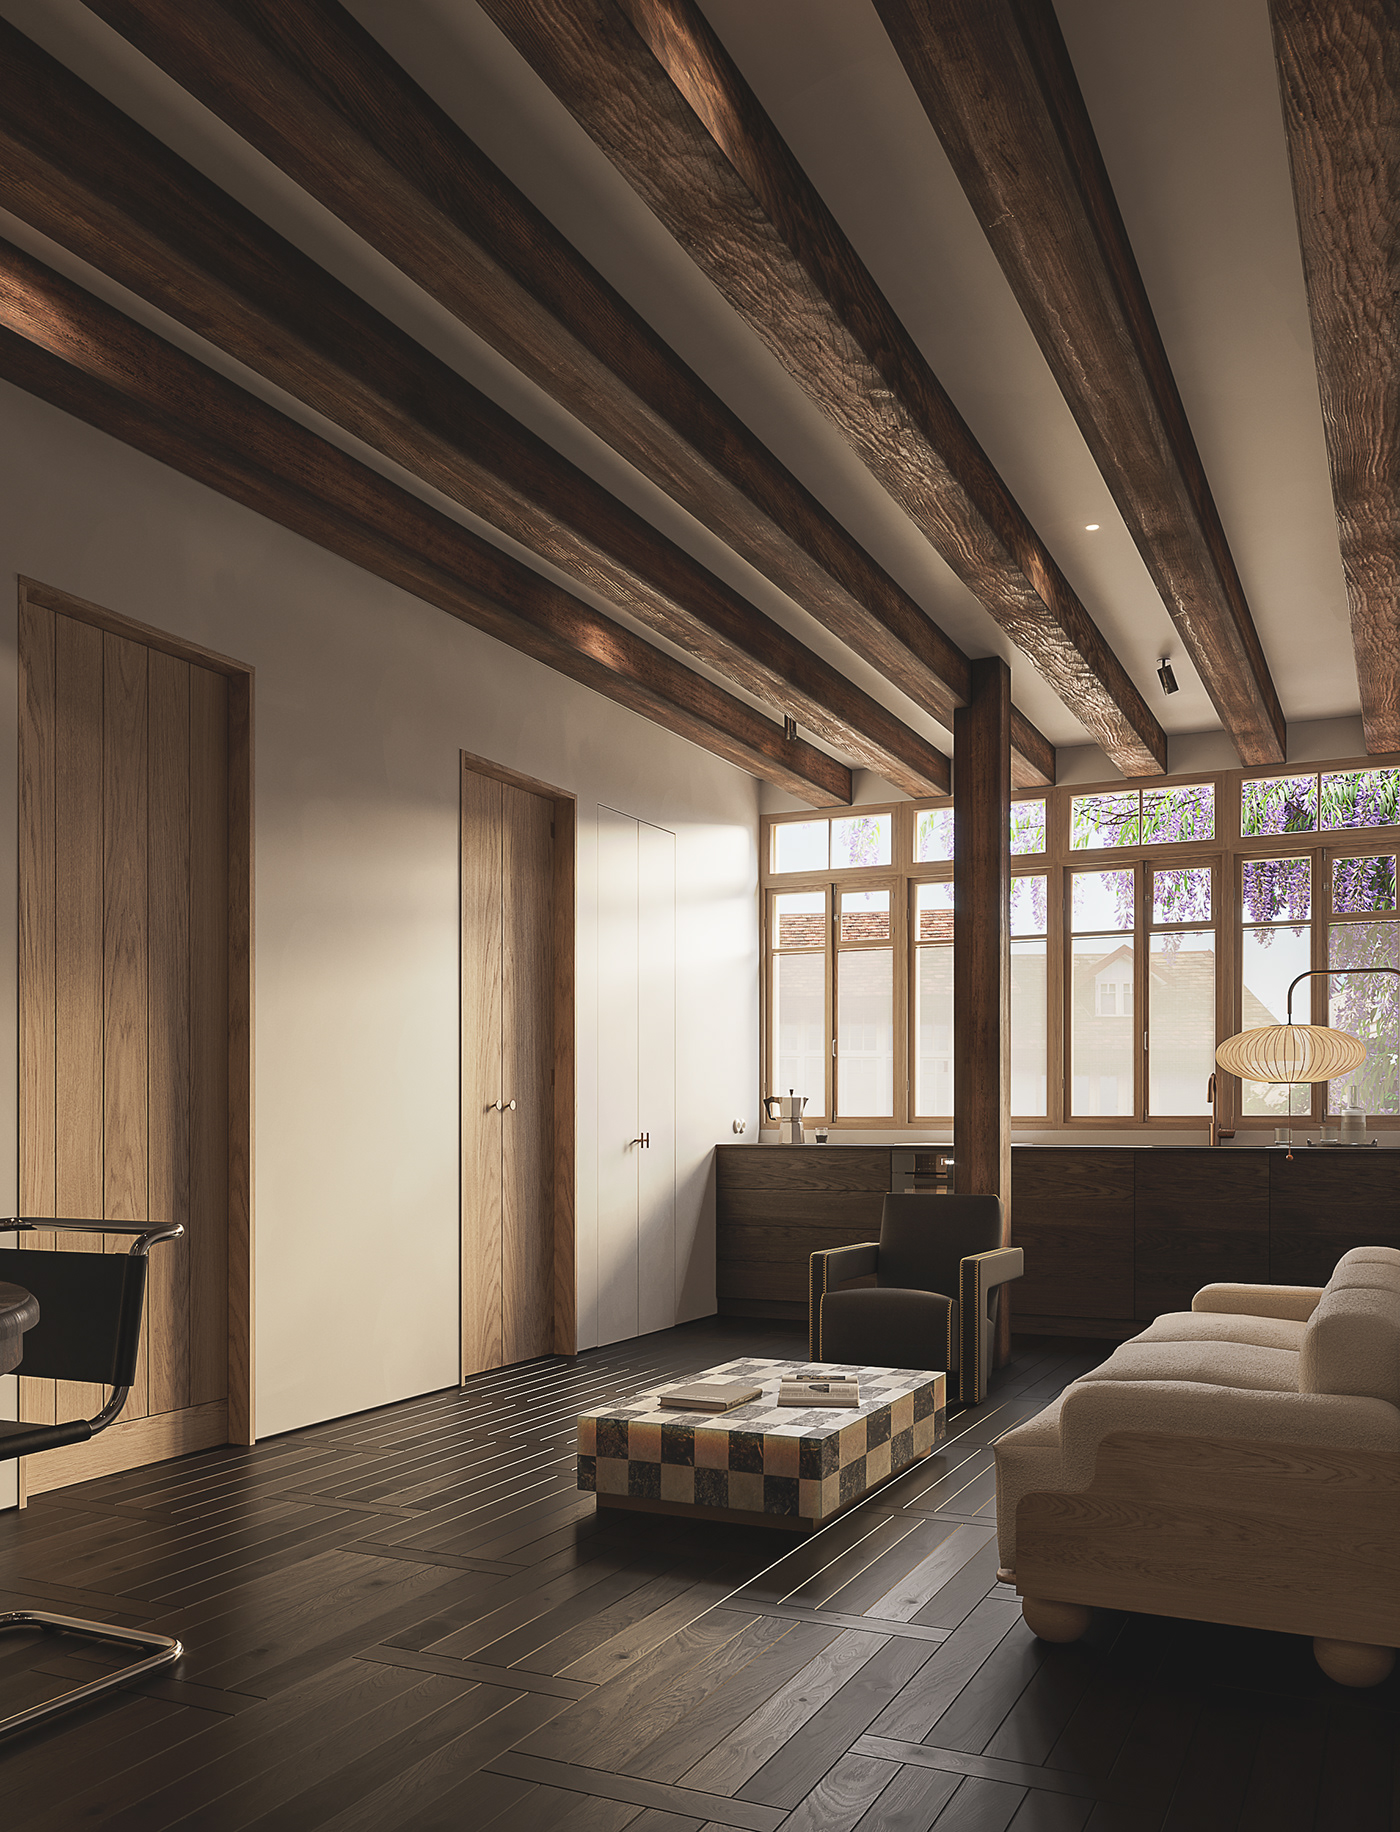 Interior 3ds max visualization Render interior design  CGI archviz architecture corona apartment